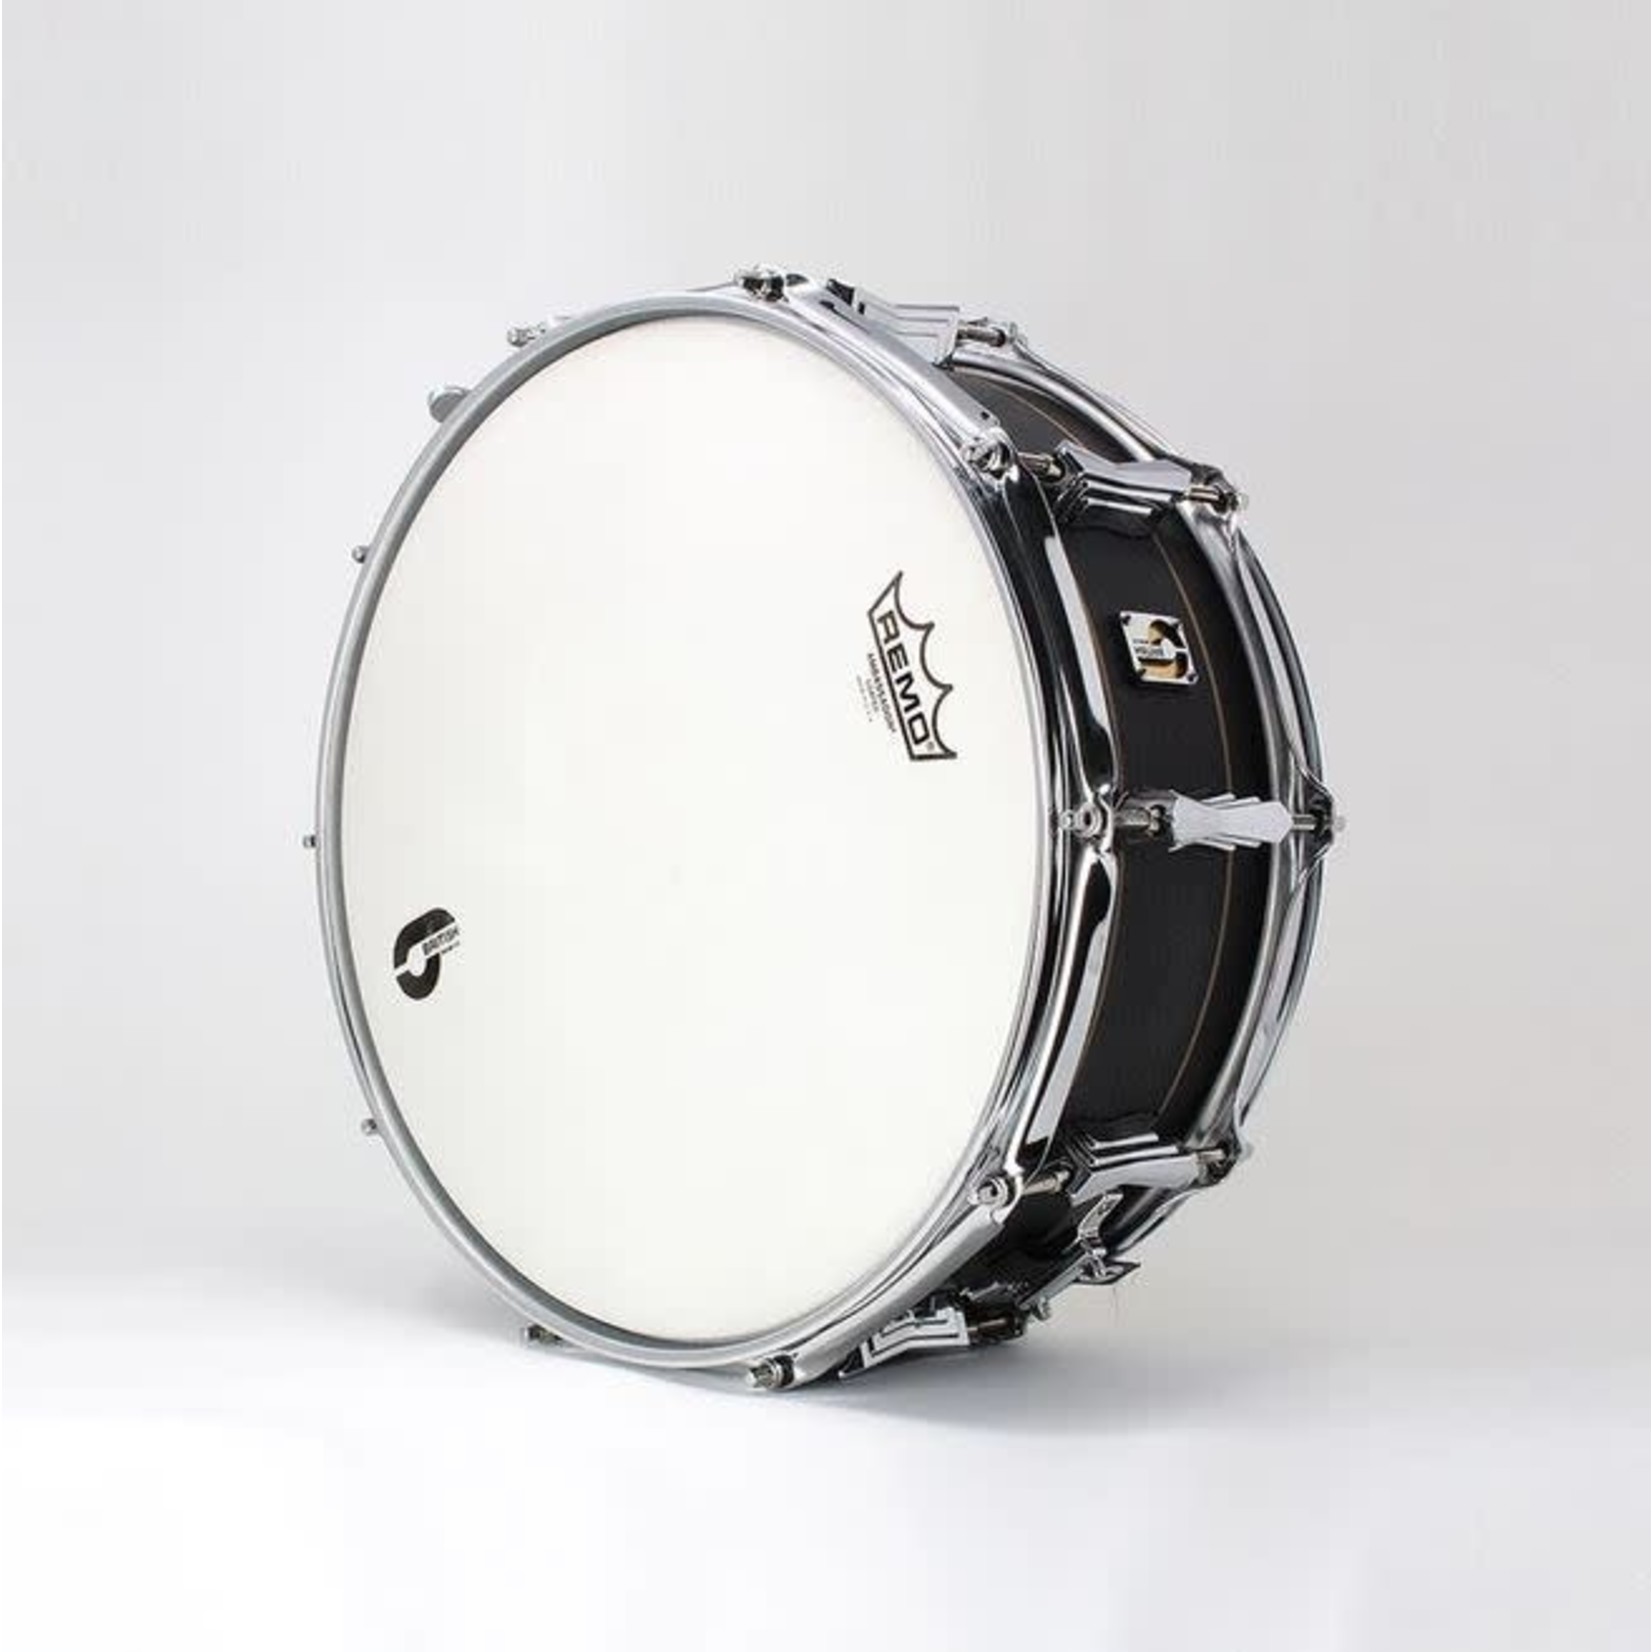 British Drum Co. British Drum Co. "The Merlin" 6.5x14" 20-Ply Birch & Maple Shell Snare Drum